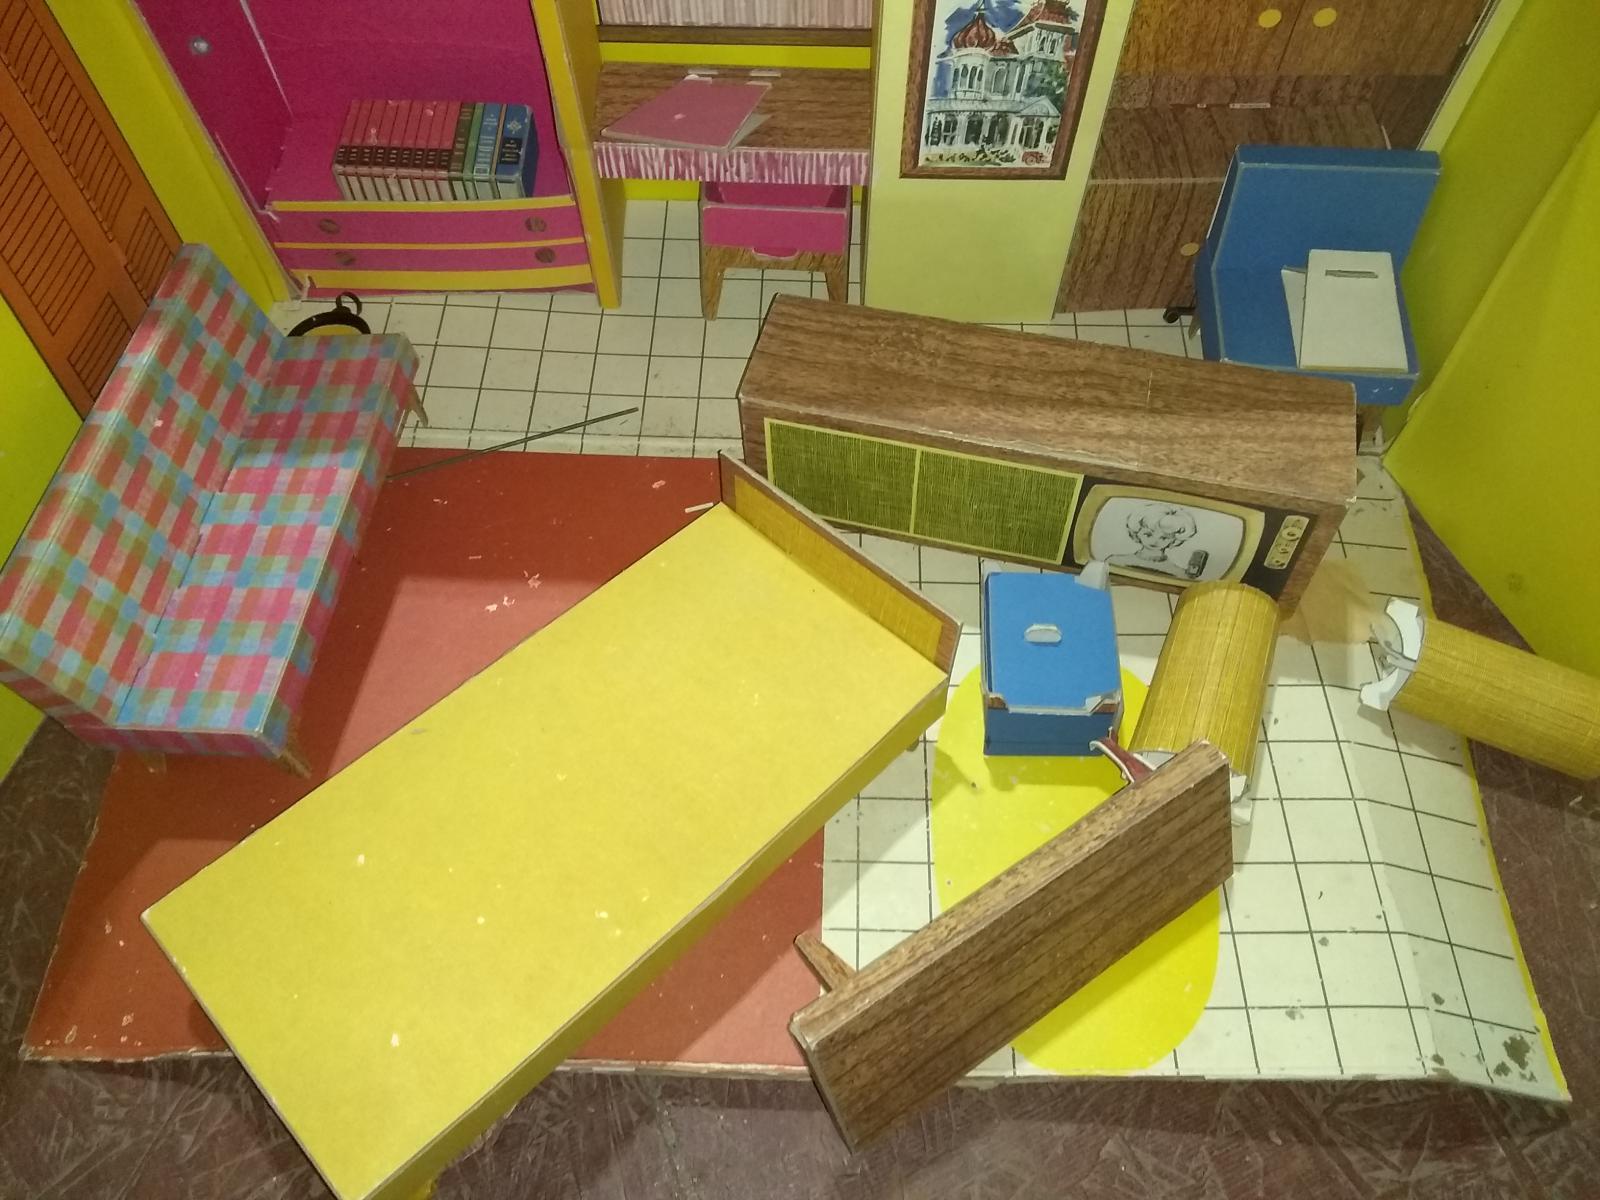 BL-Vintage Barbie Dream House -as found